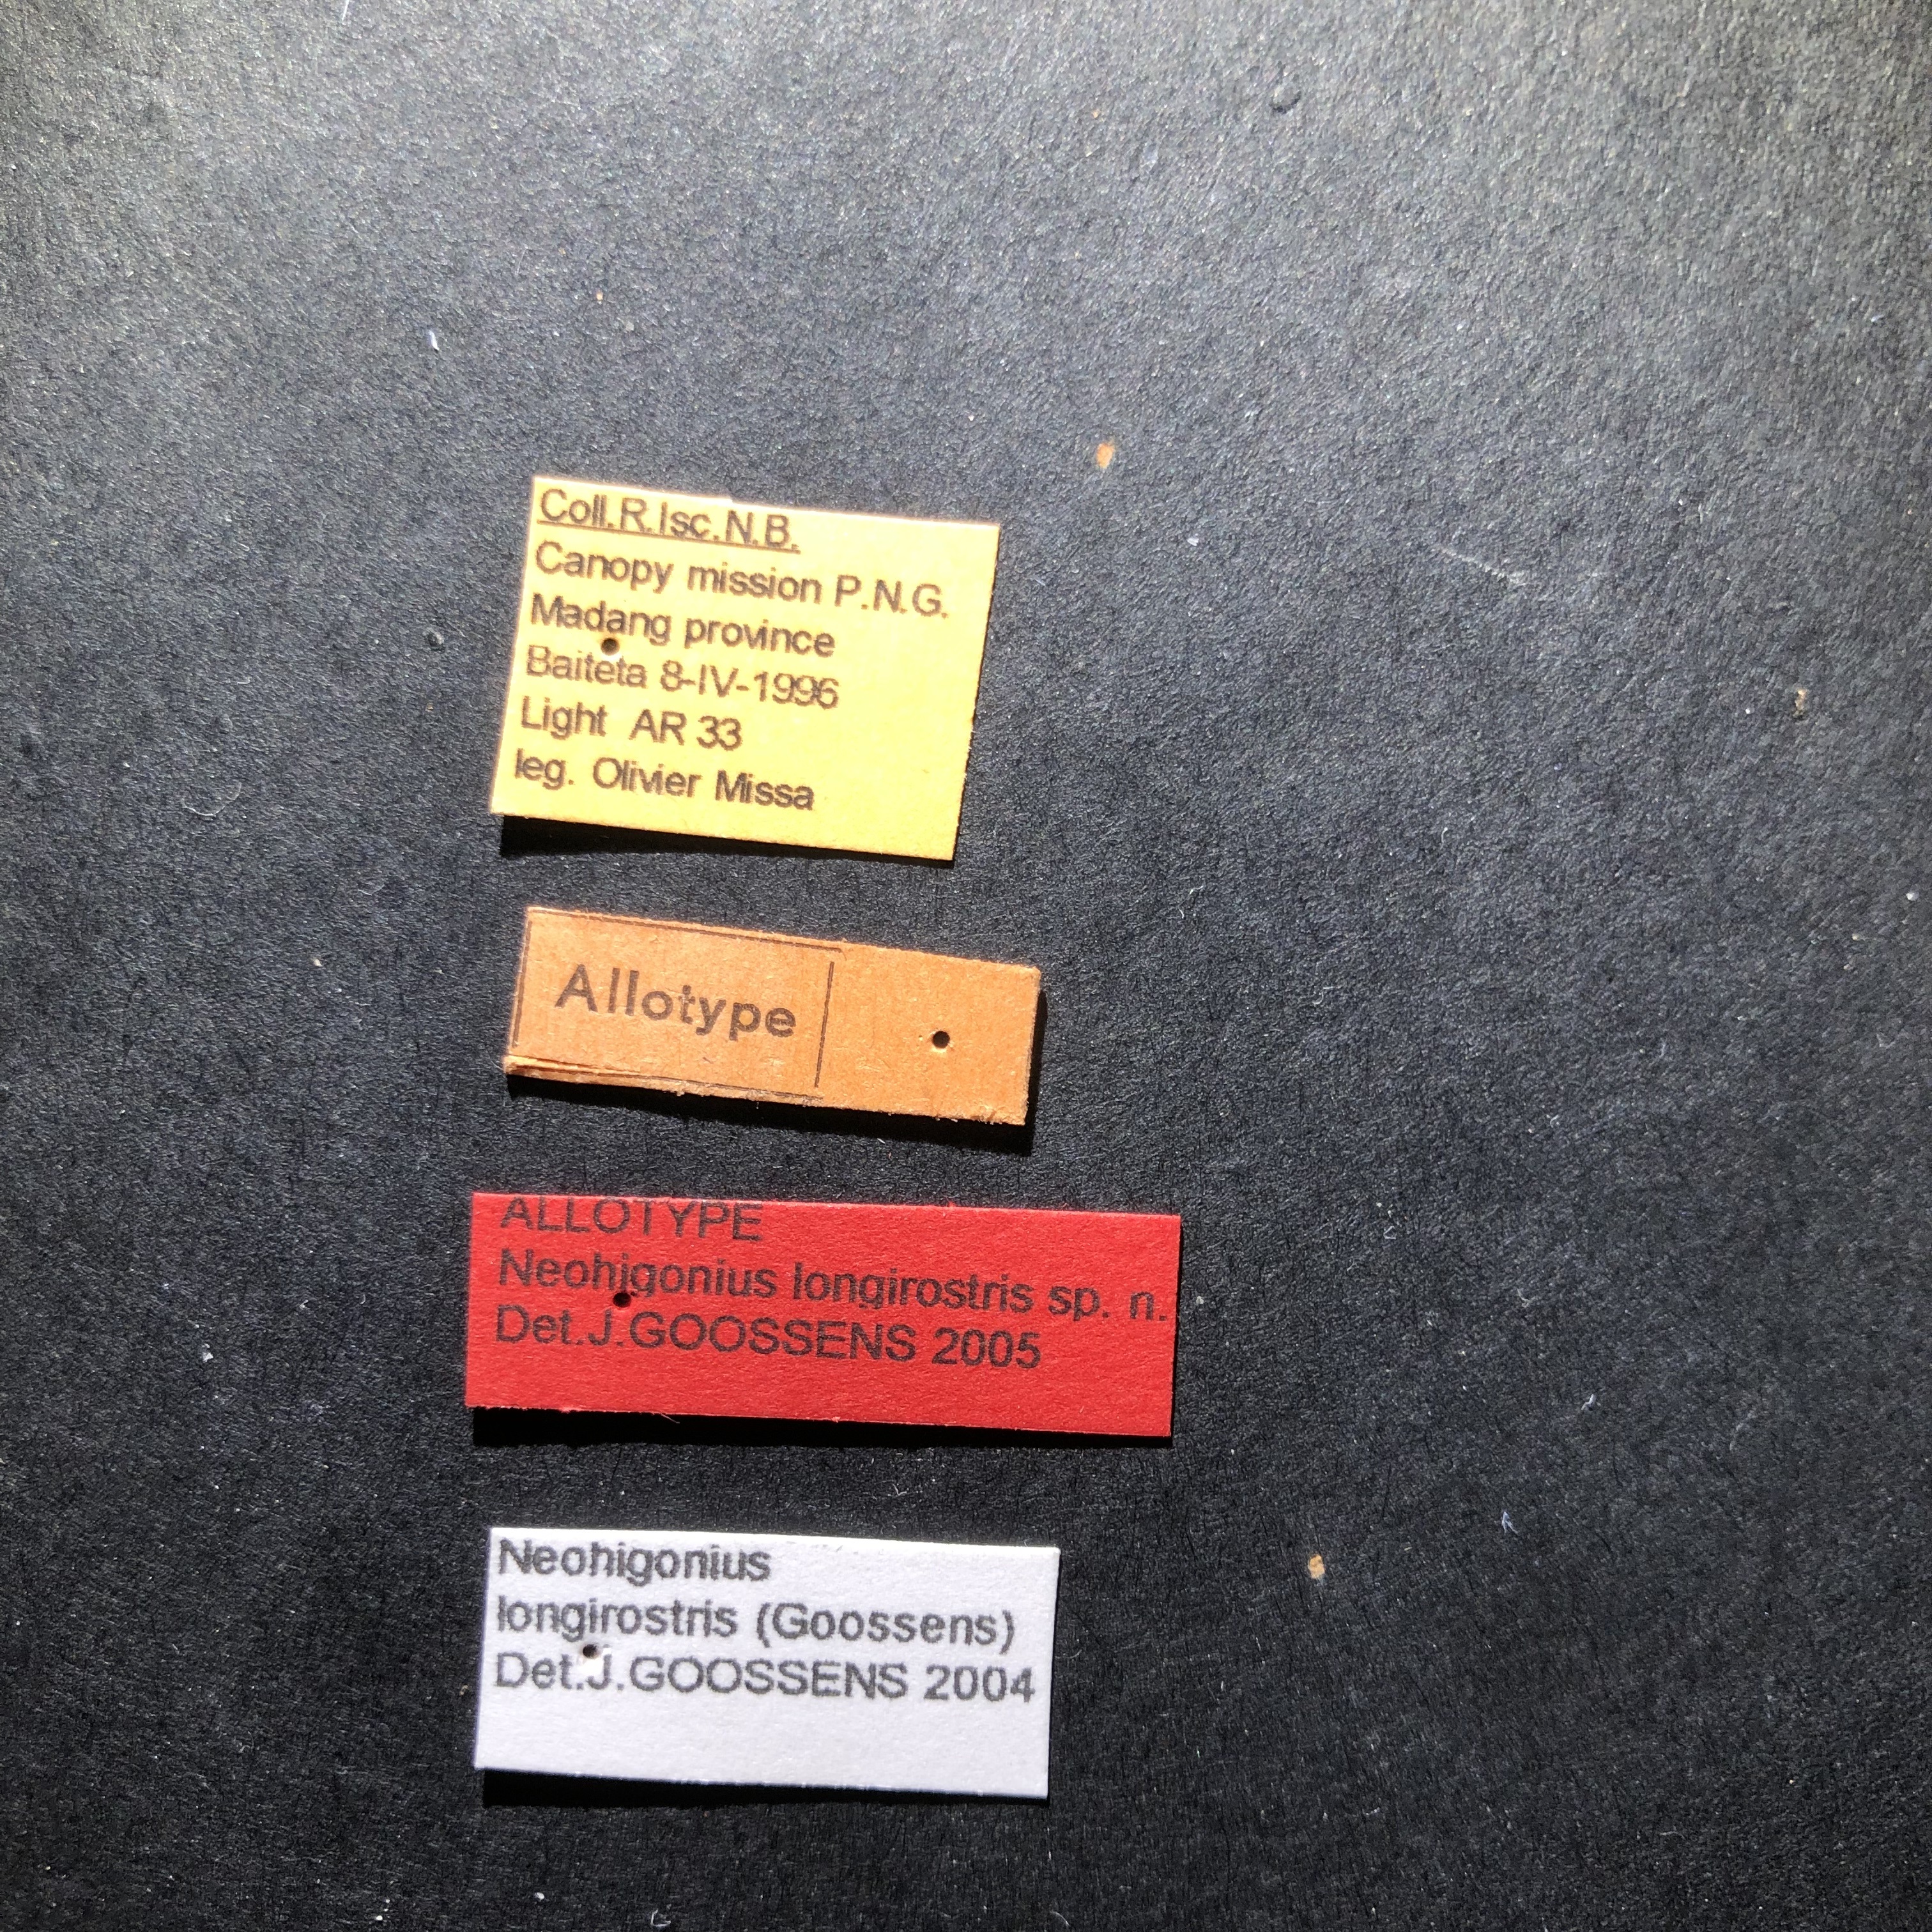 Neohigonius longirostris at Labels.jpg